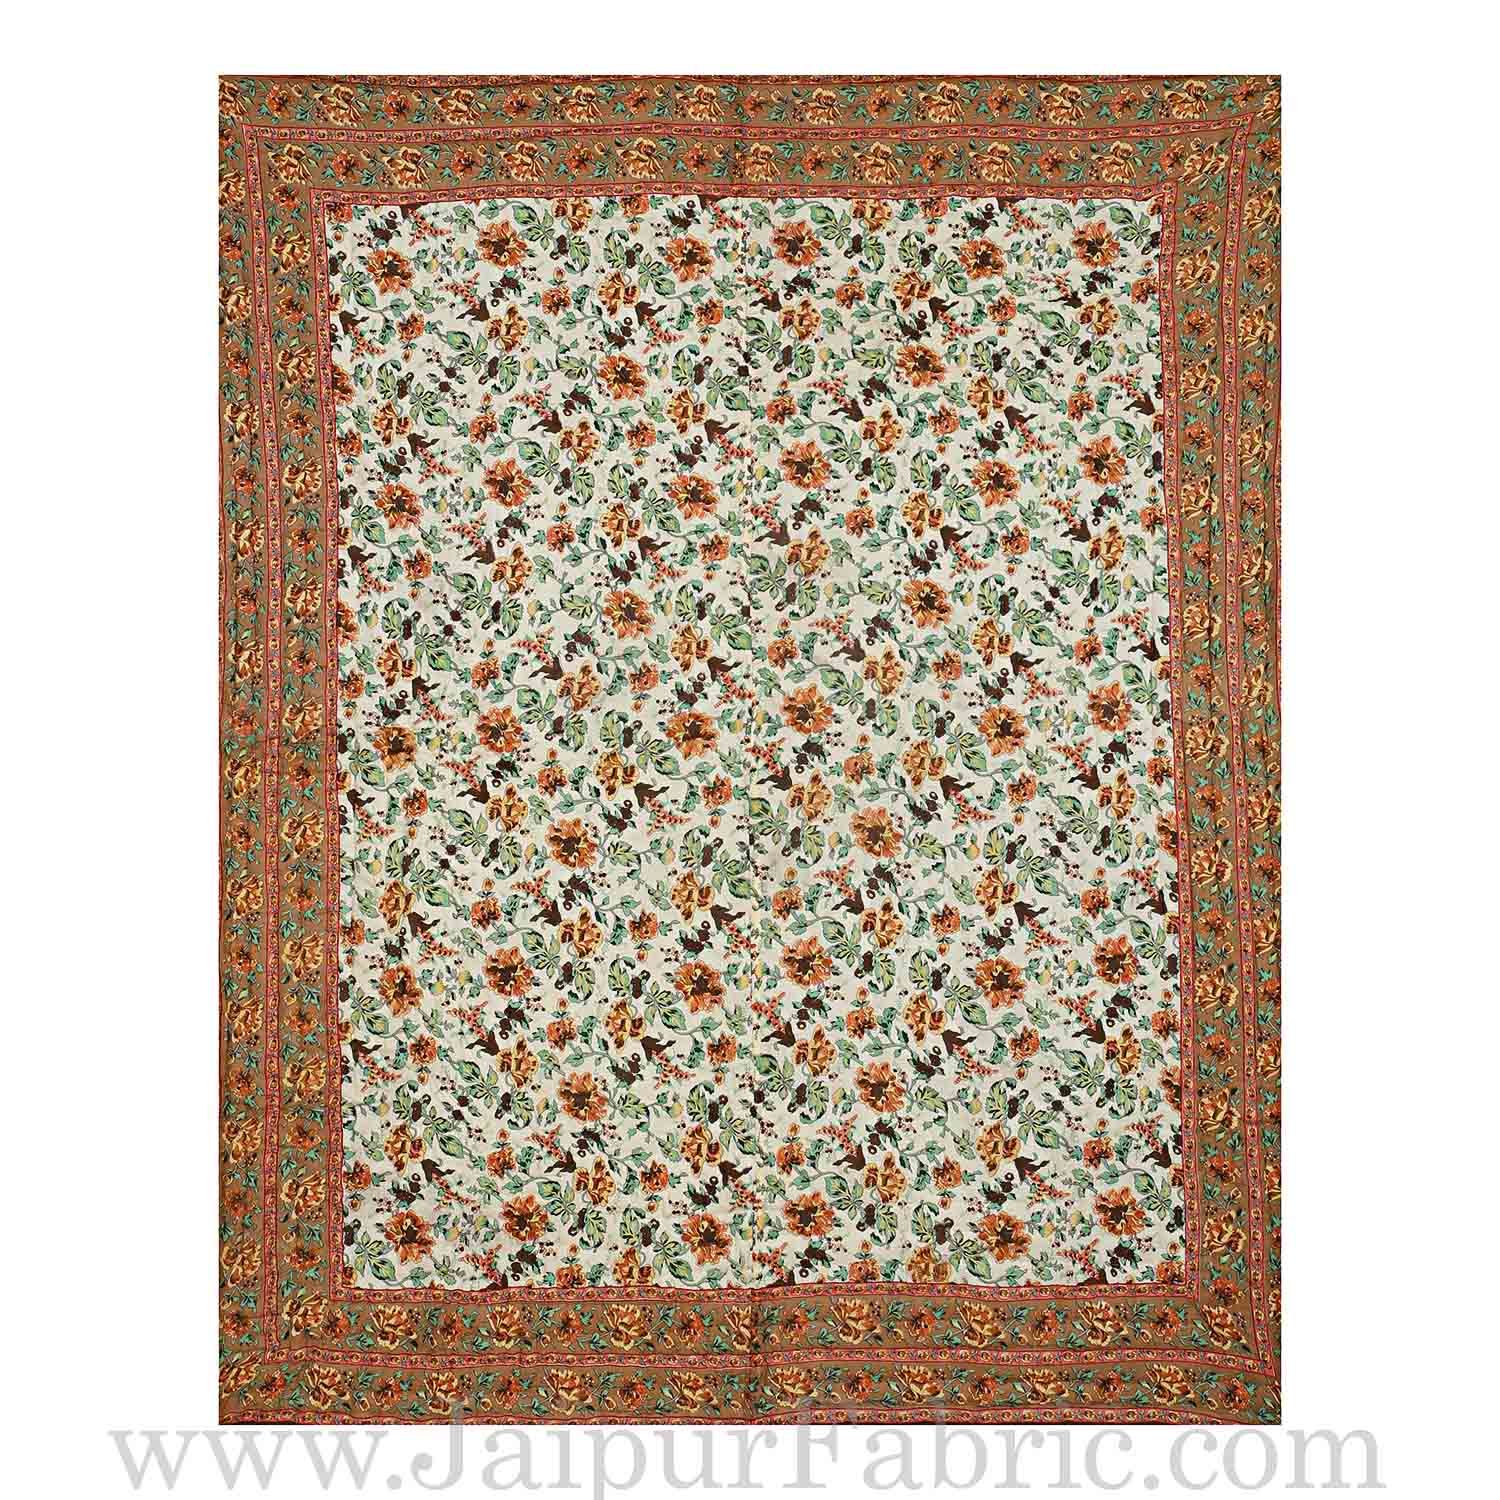 Jaipur Rajai Mughal Print Fine Cotton Double Bed Quilt